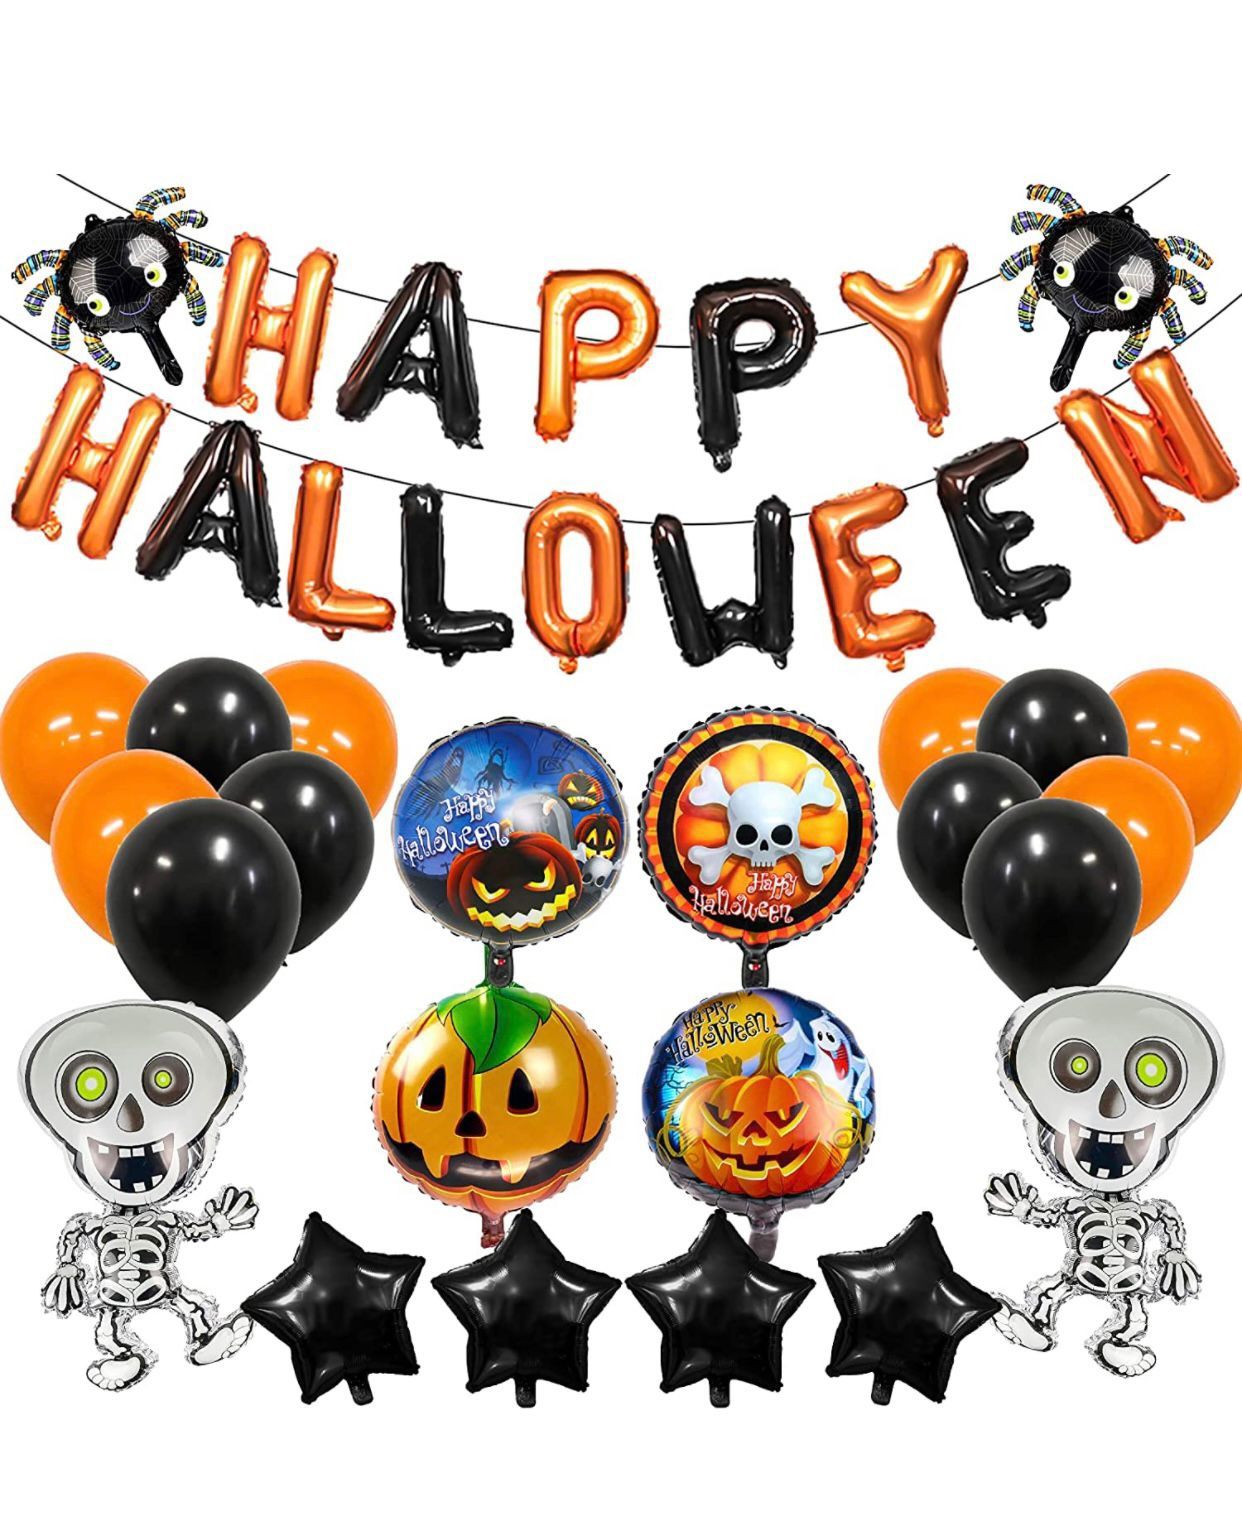 New 38Pcs Halloween Balloons for Halloween Party Decoration with Dancing Skeletons, Pentagram Black,Halloween Pumkin Balls, Spider, Latex Balloons, Al